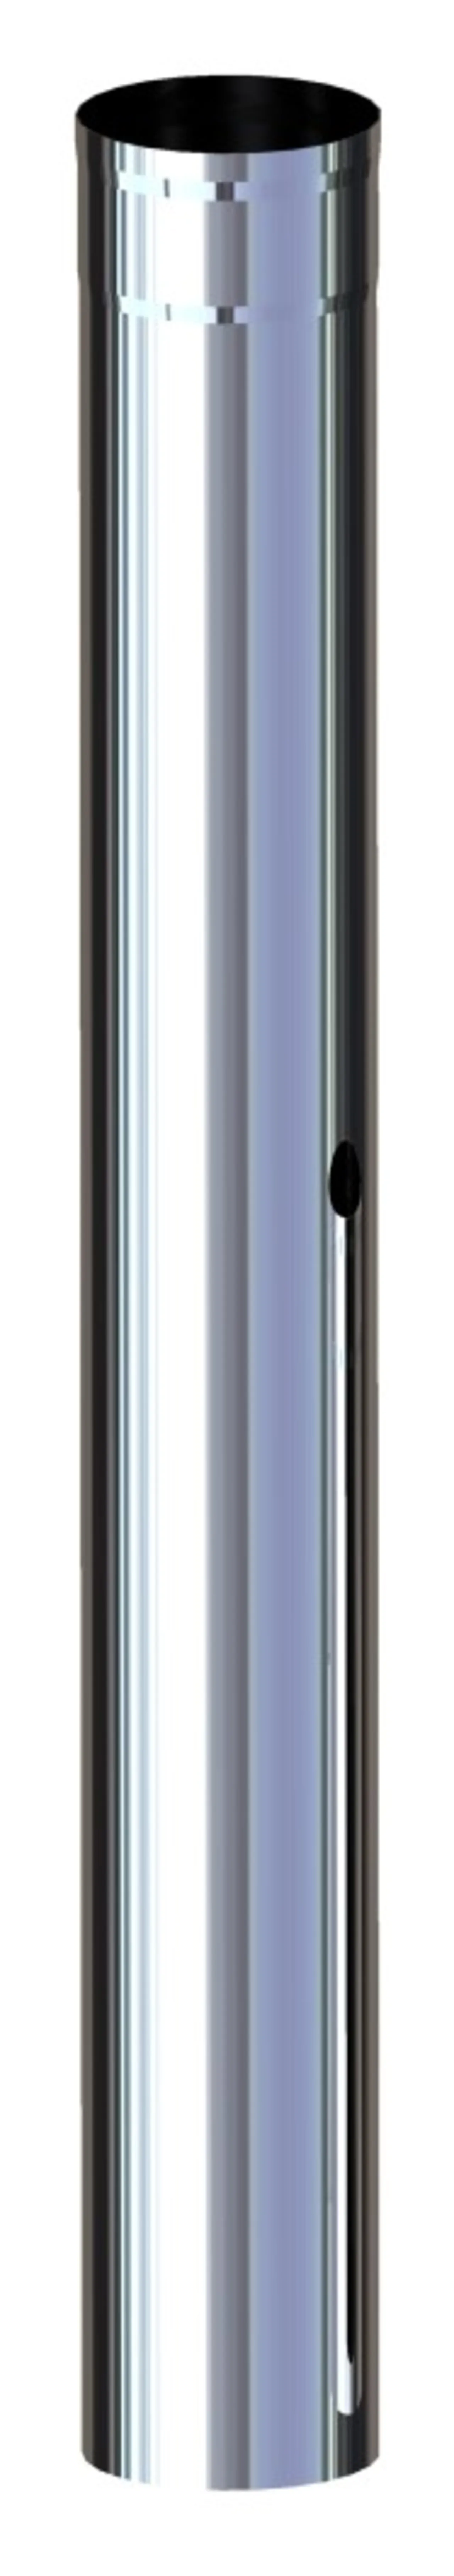 Stålpipe ø125 helis 630/1150mm sort modul med rensluke helisolert